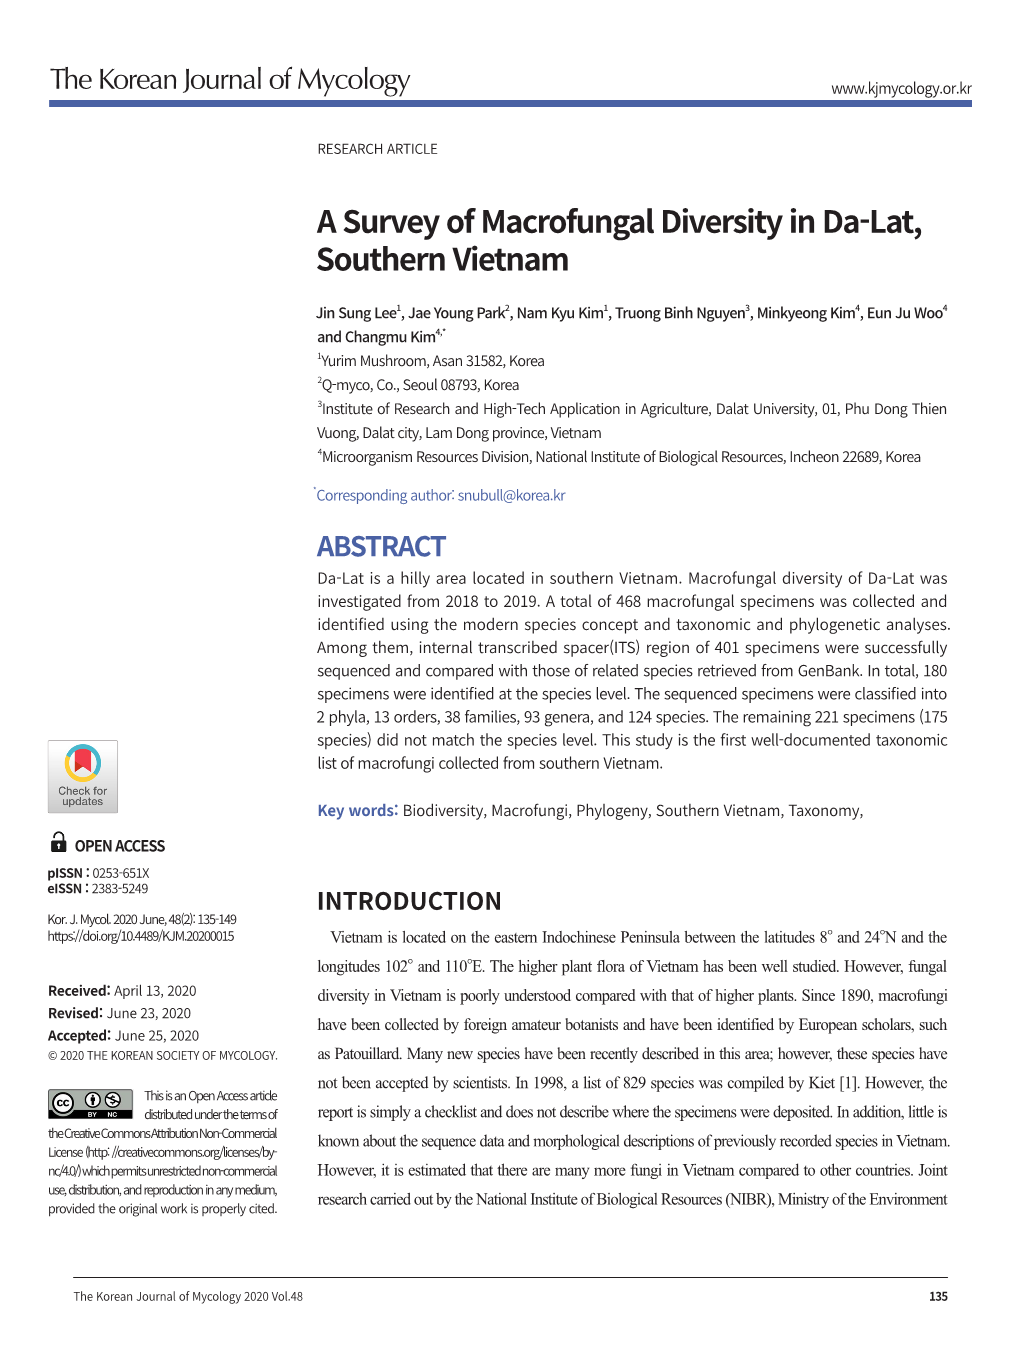 A Survey of Macrofungal Diversity in Da-Lat, Southern Vietnam